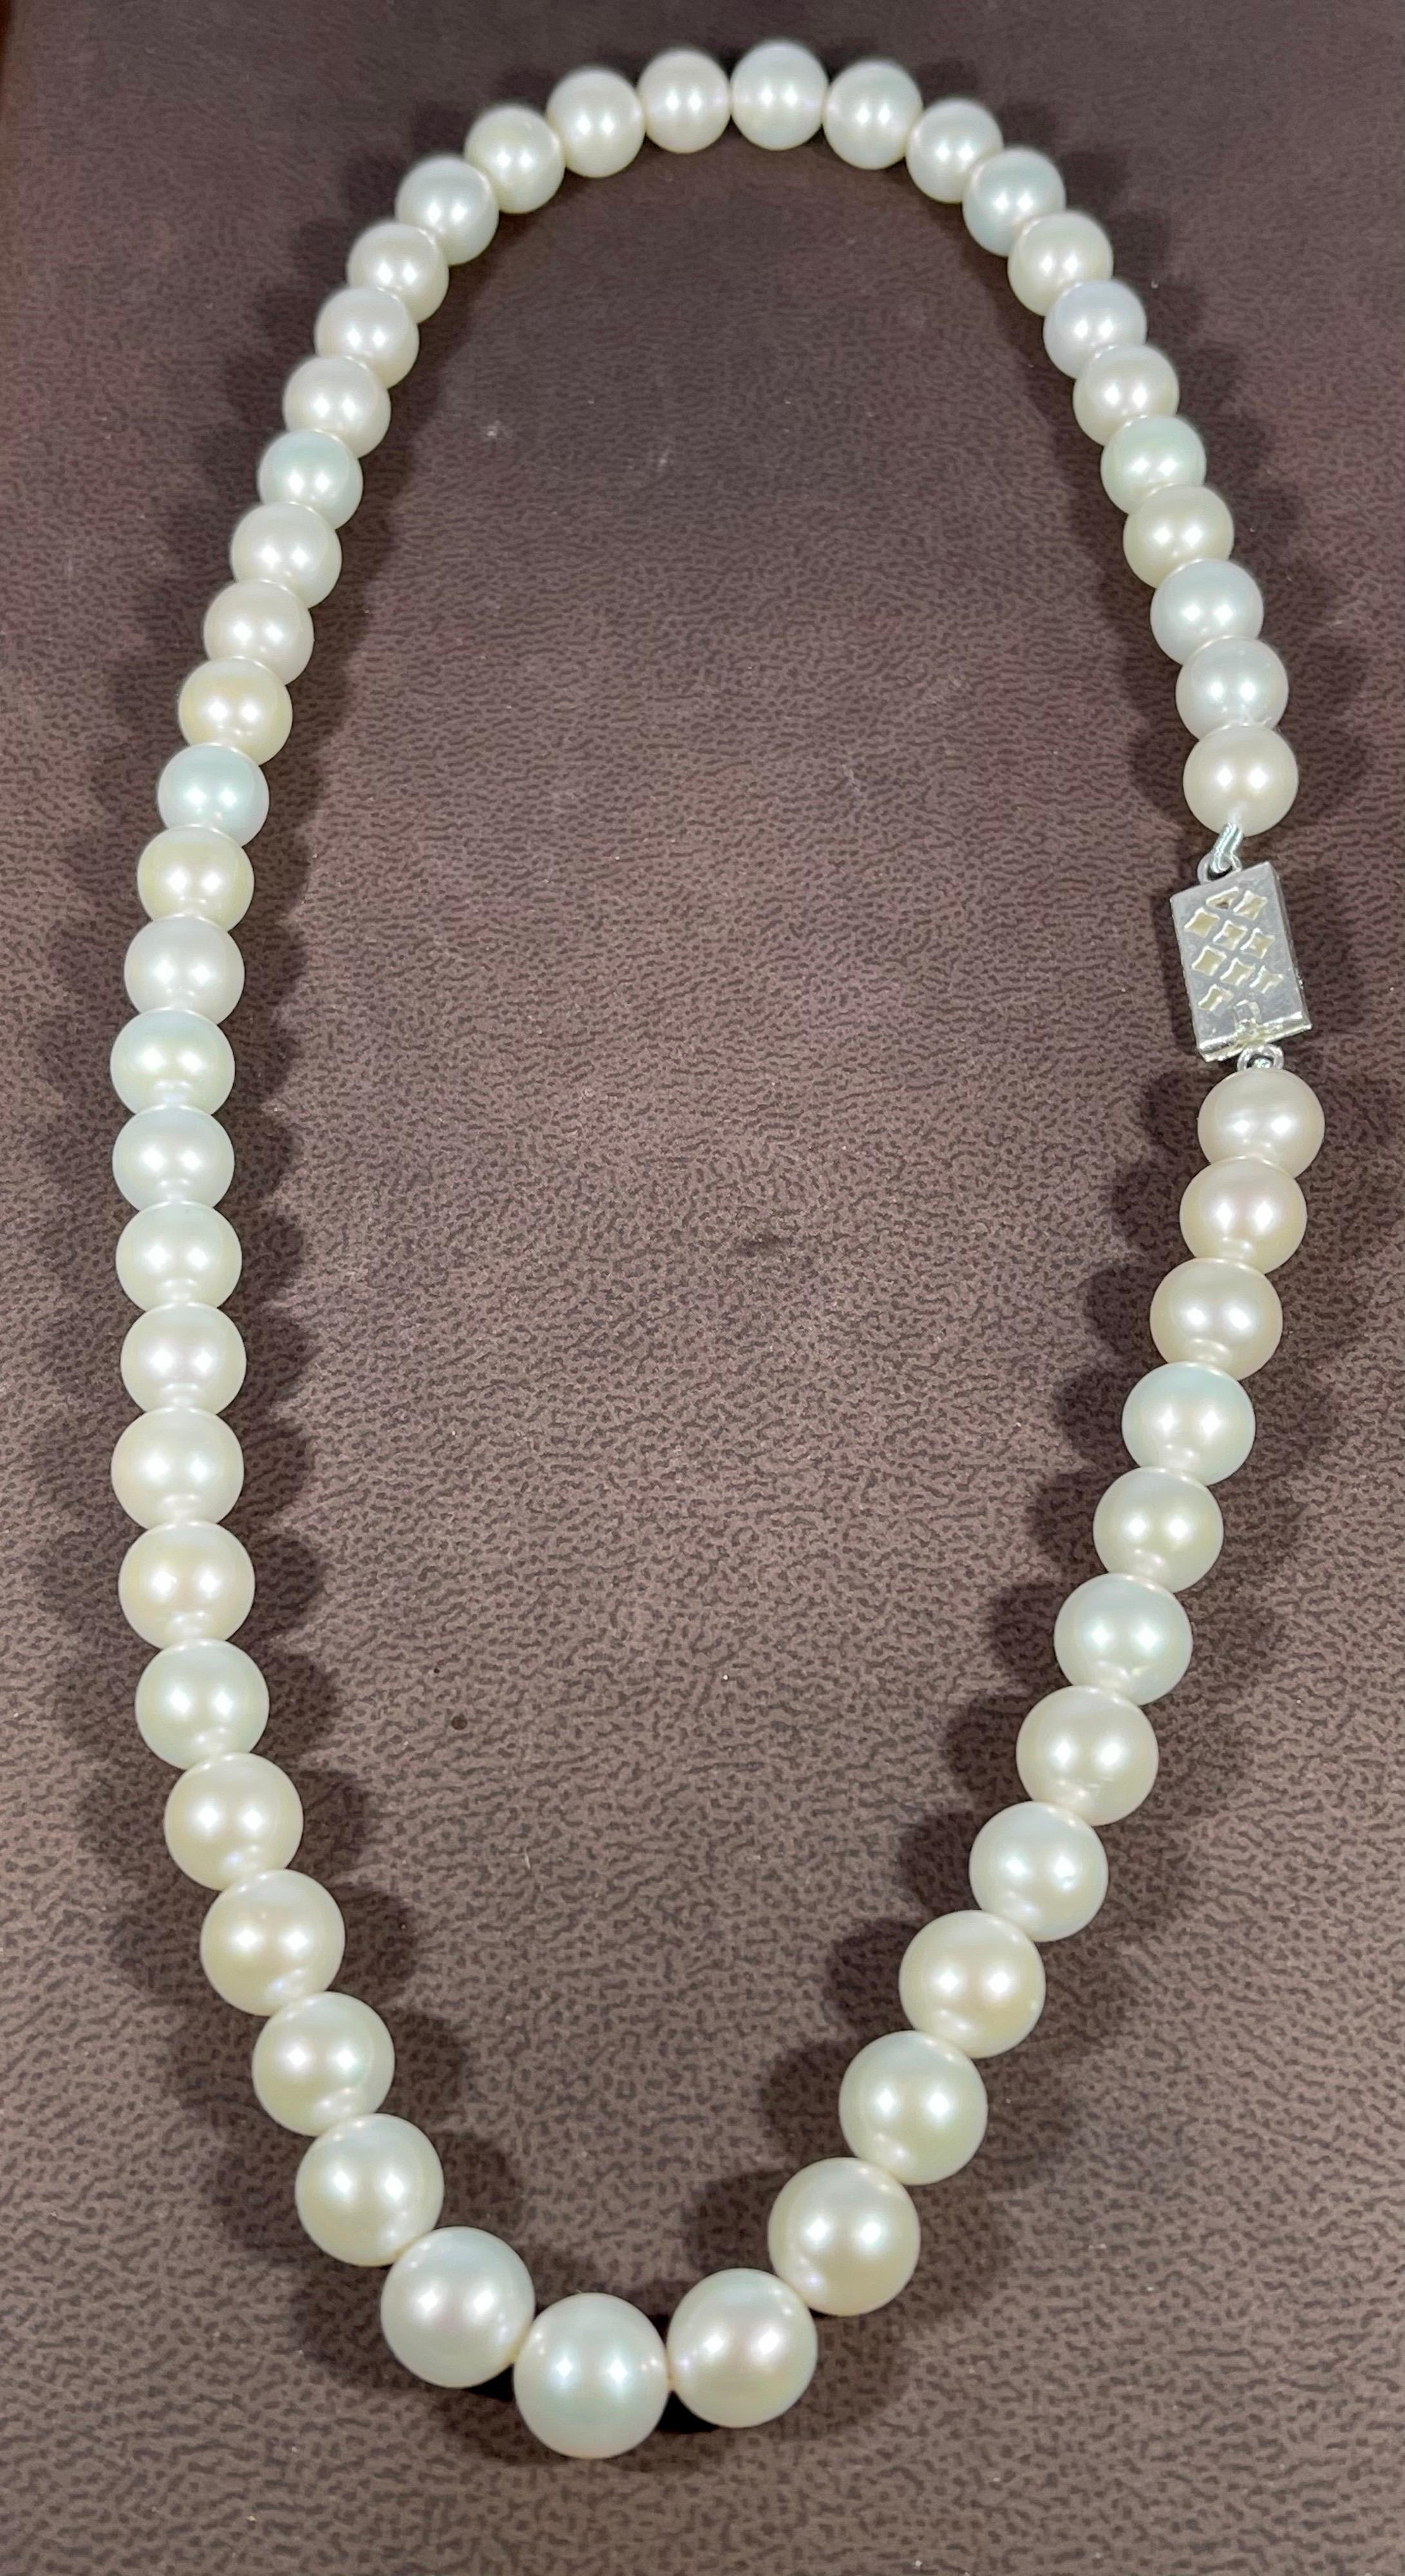 8-9 mm pearl